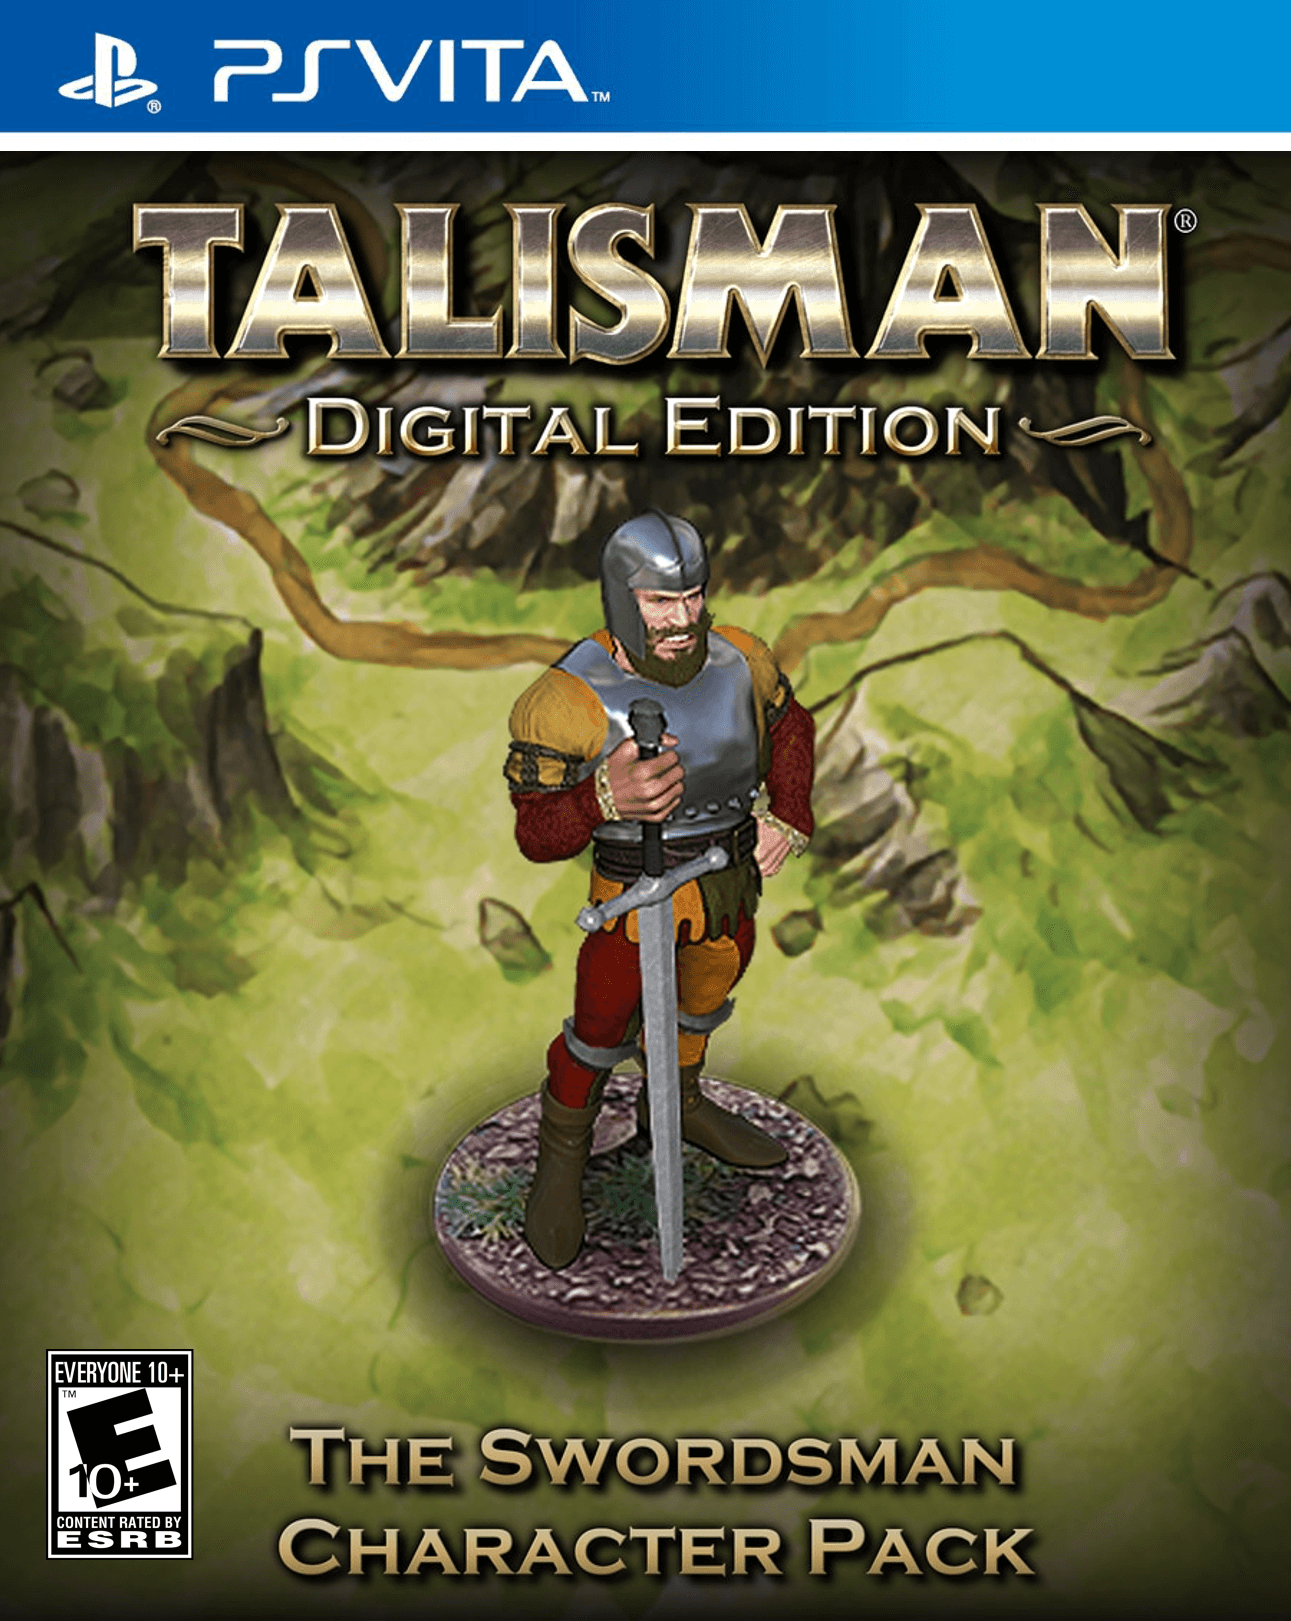 Talisman: Digital Edition